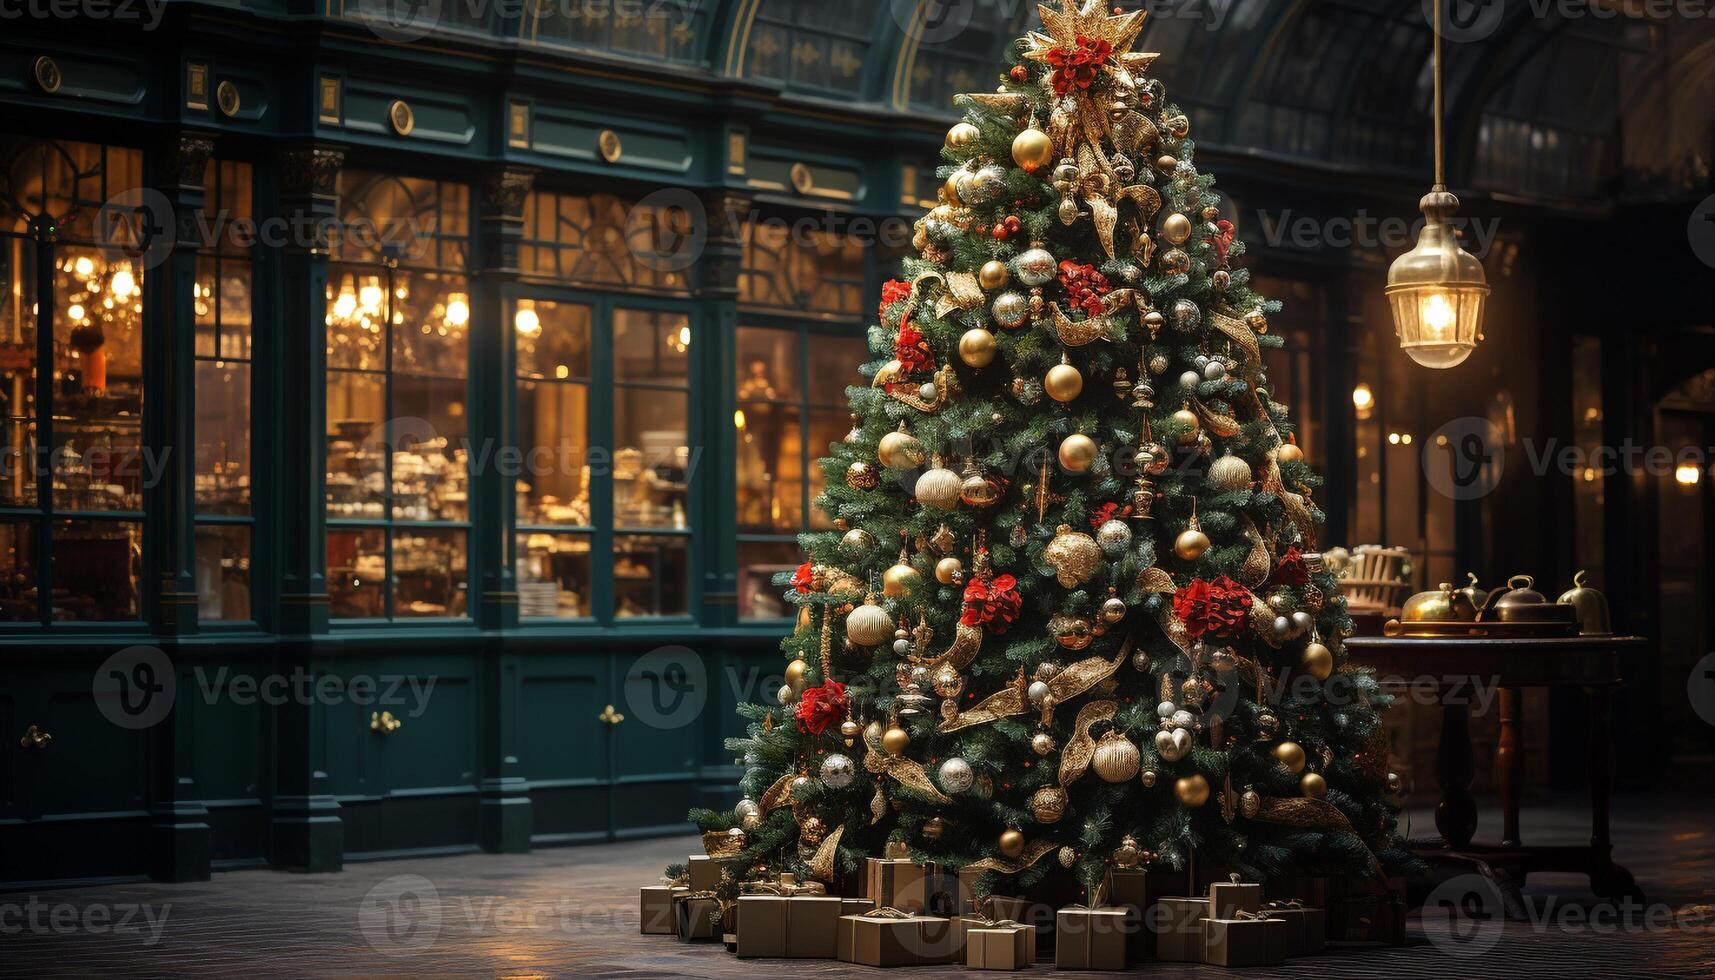 ai gegenereerd Kerstmis boom decoratie verlichte met Kerstmis lichten binnenshuis gegenereerd door ai foto